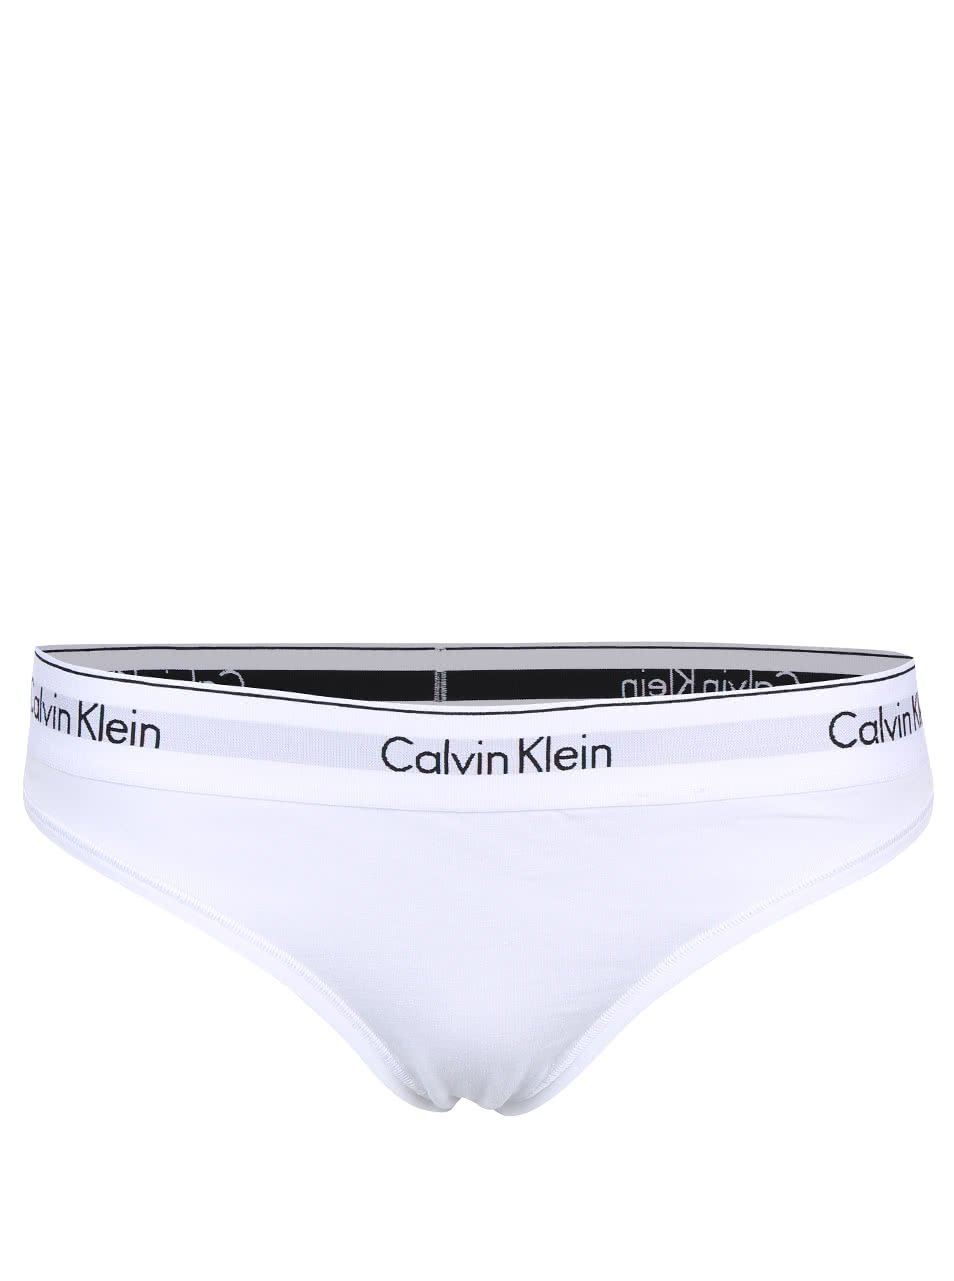 Bílá tanga Calvin Klein